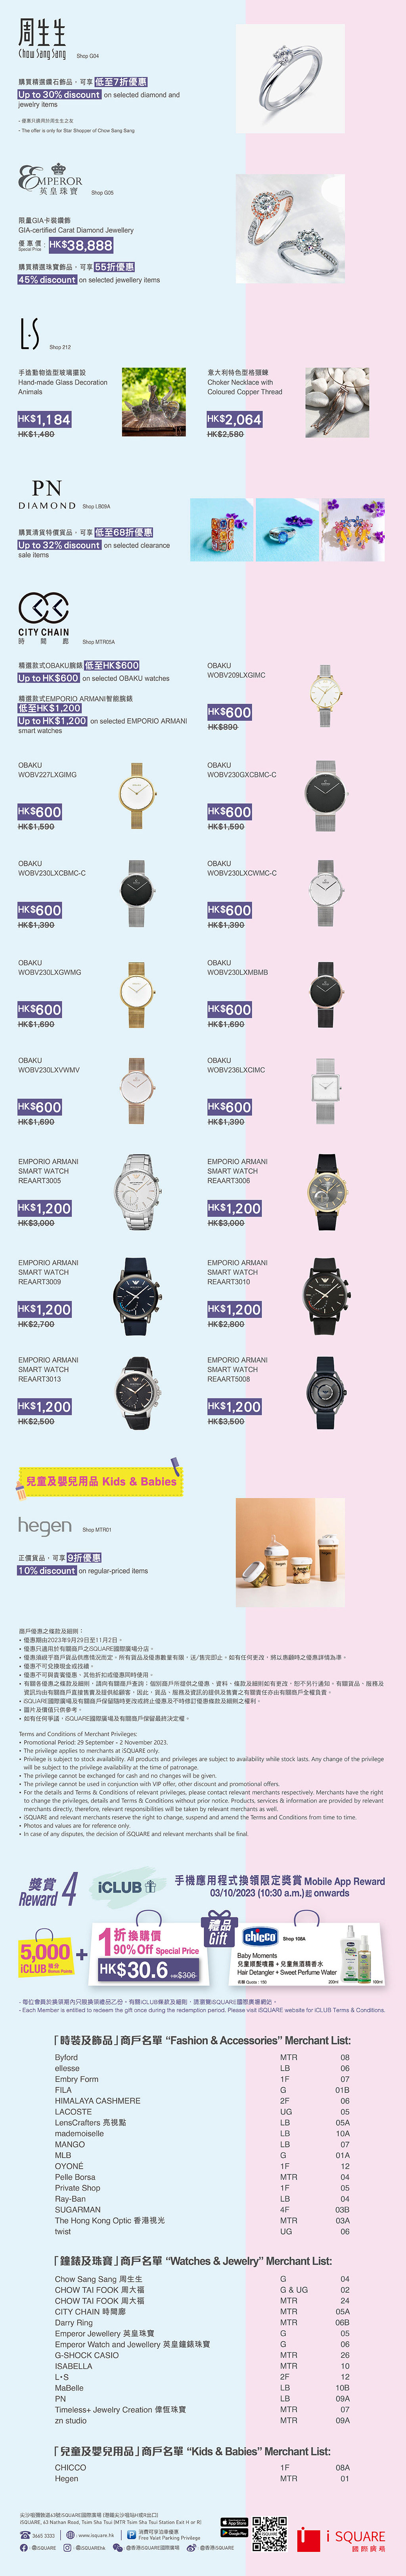 「Fashion Fest」: 消費換領HK$1星級禮品及電影禮券換領，商戶優惠近1折